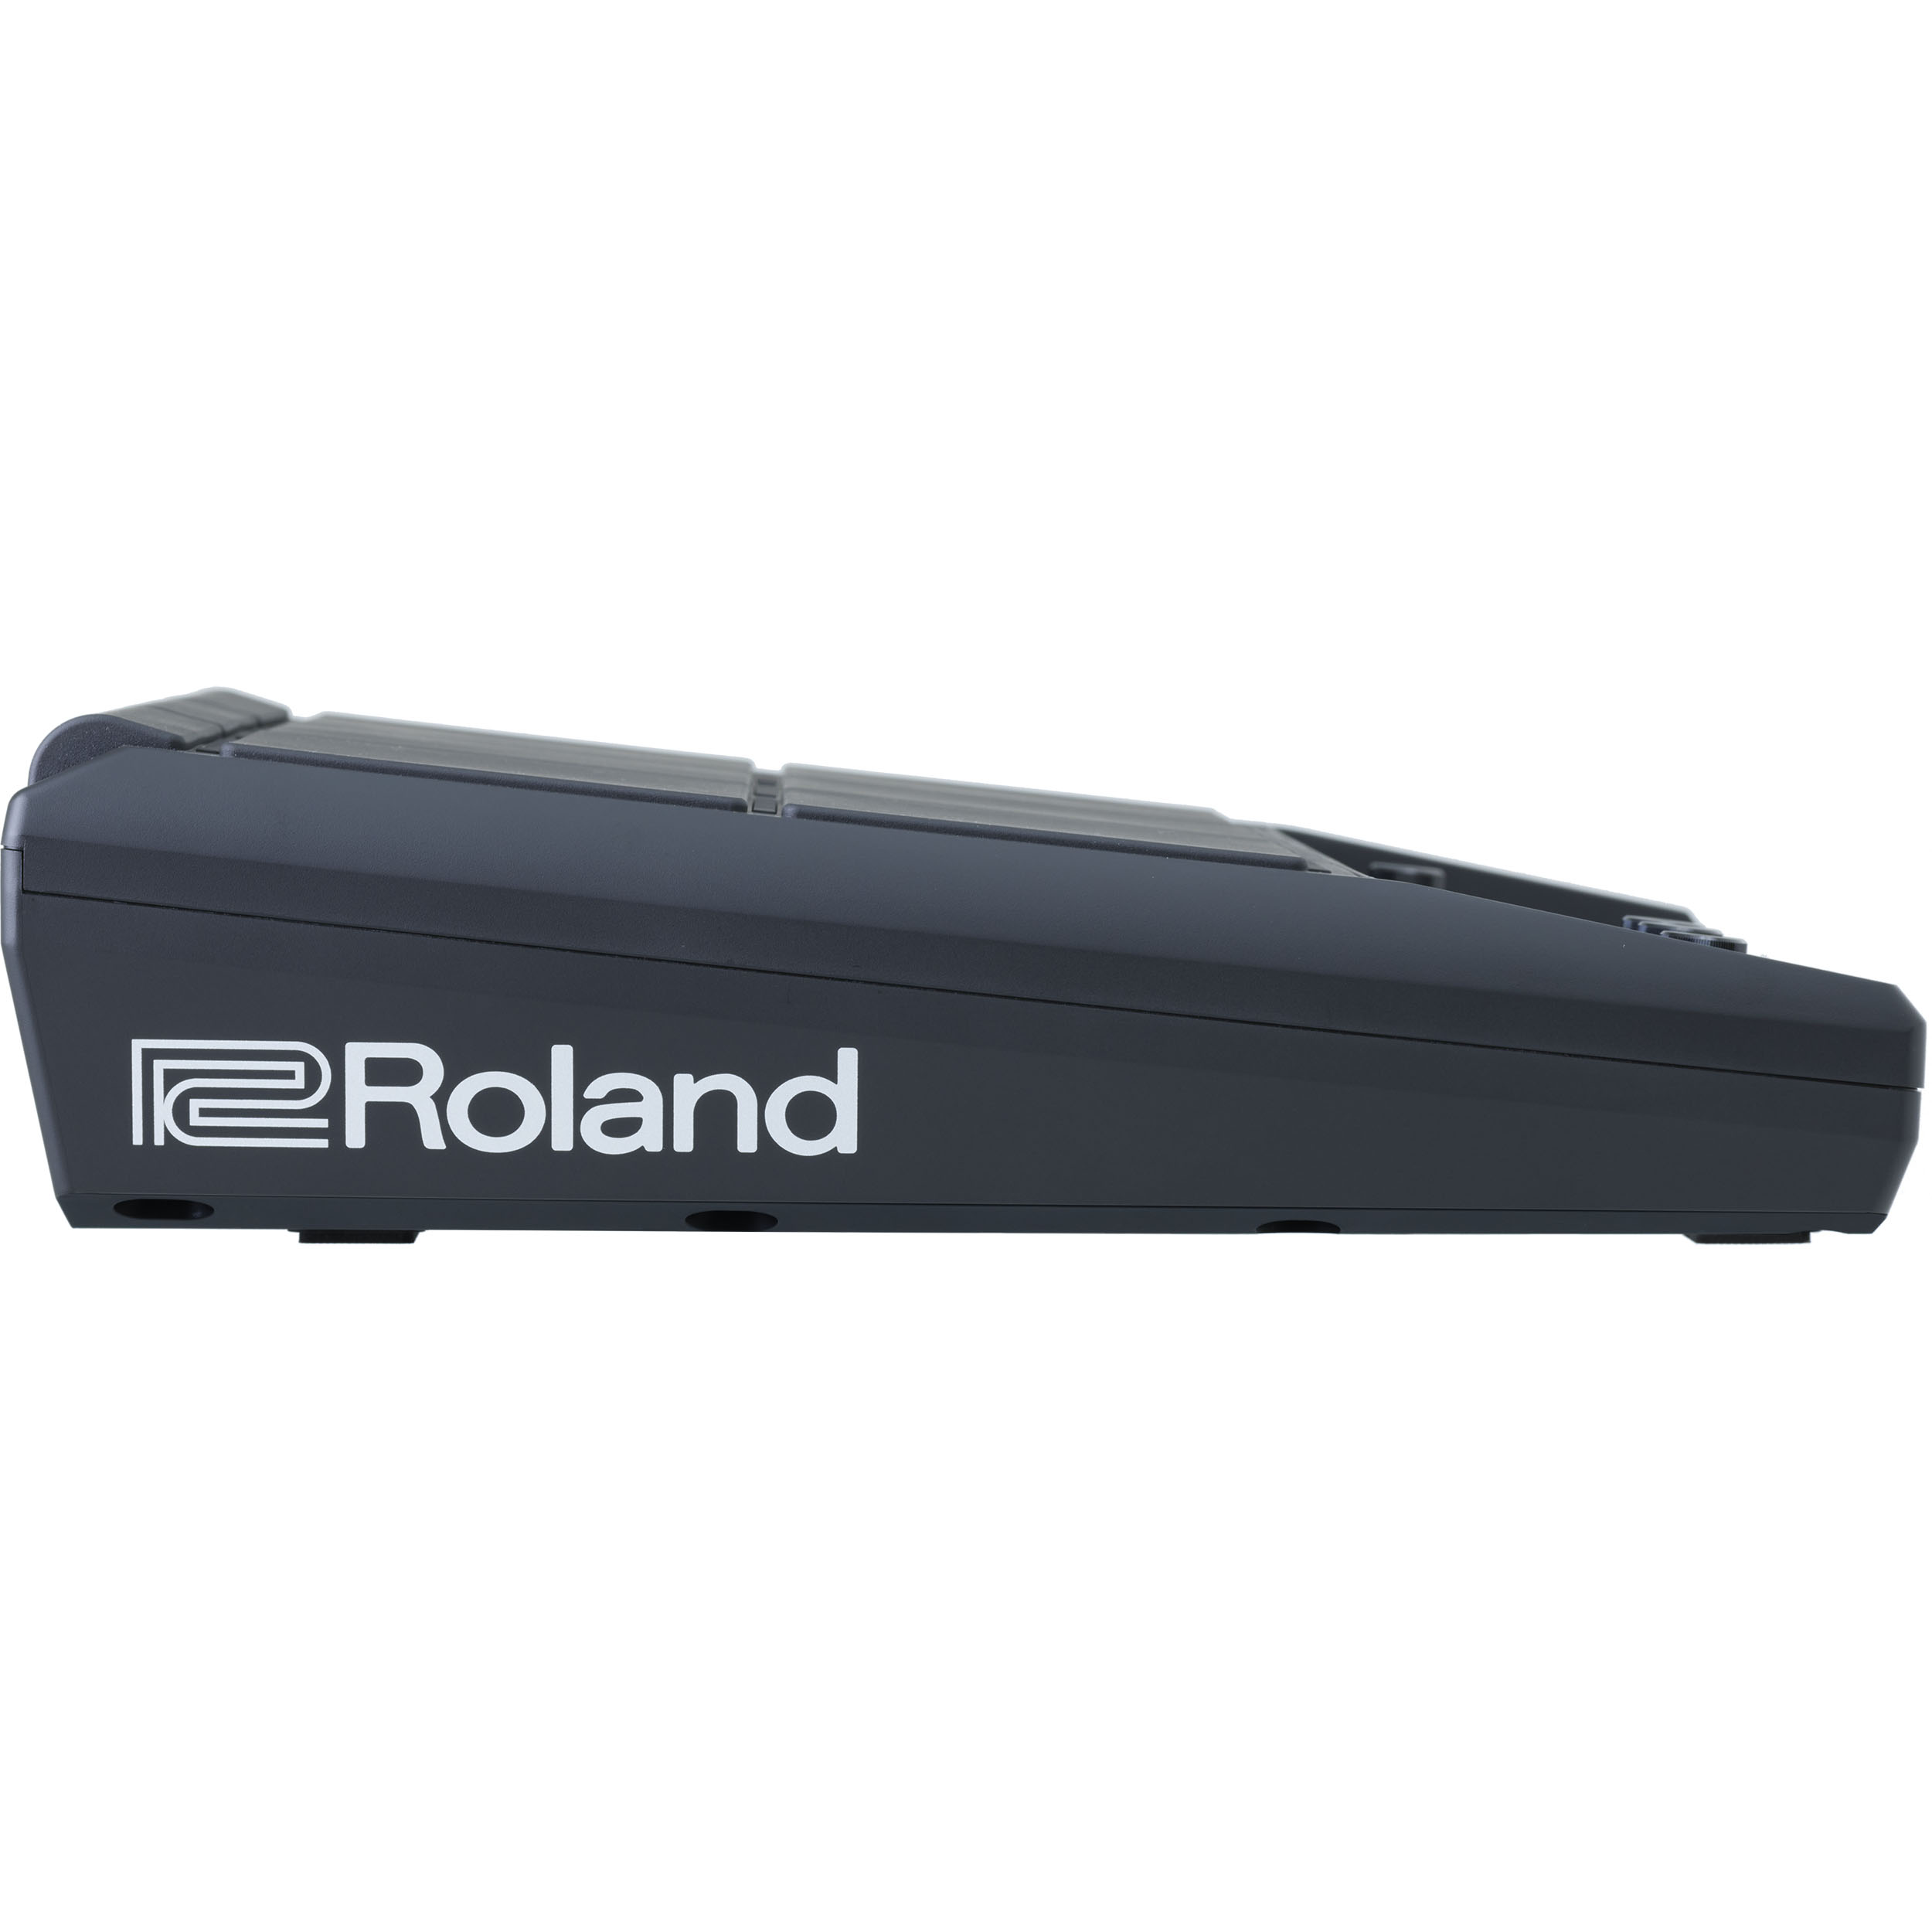 Roland Spd-sx Pro - Electronic drum mutlipad & sampling pad - Variation 2